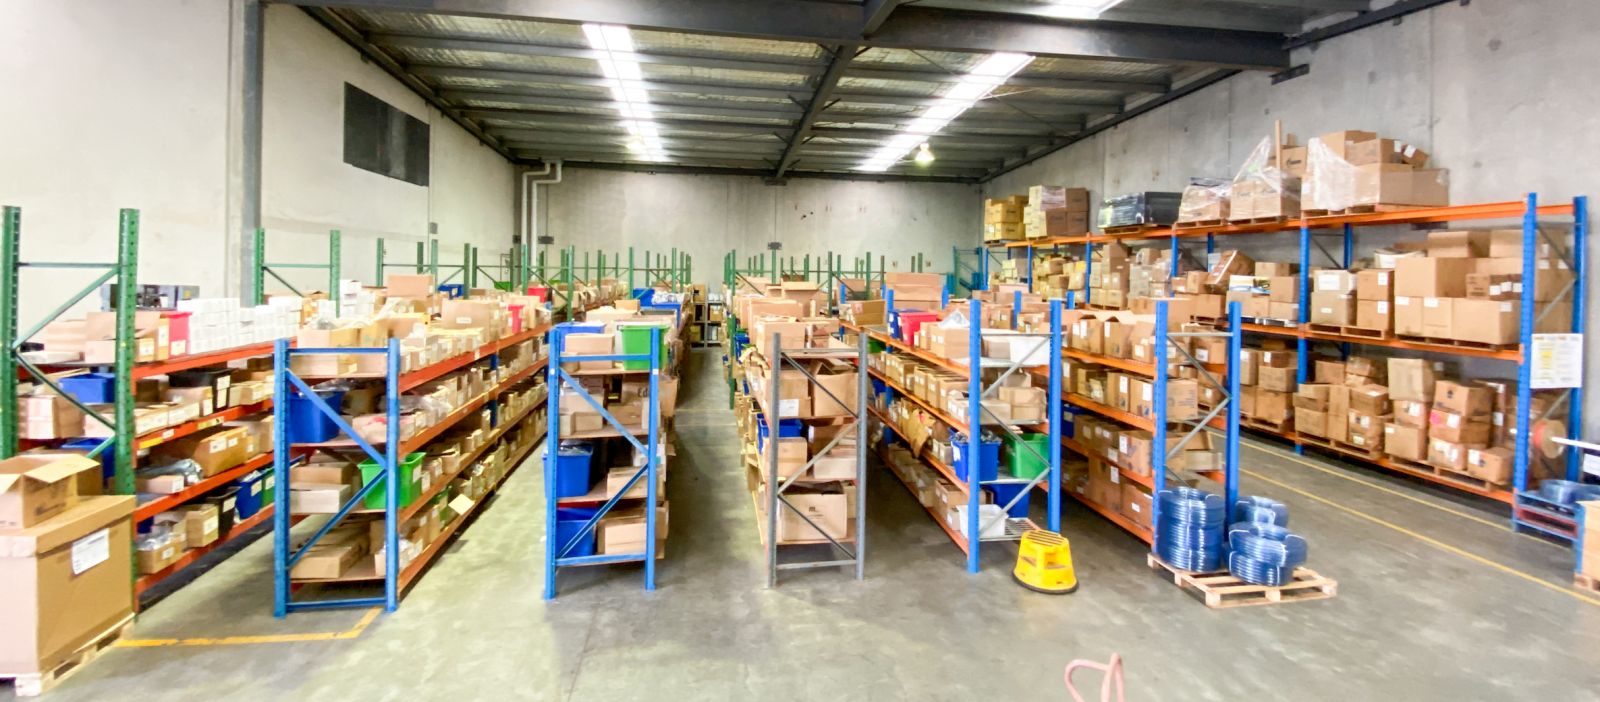 Australian Spa Parts - Brisbane spa parts warehouse